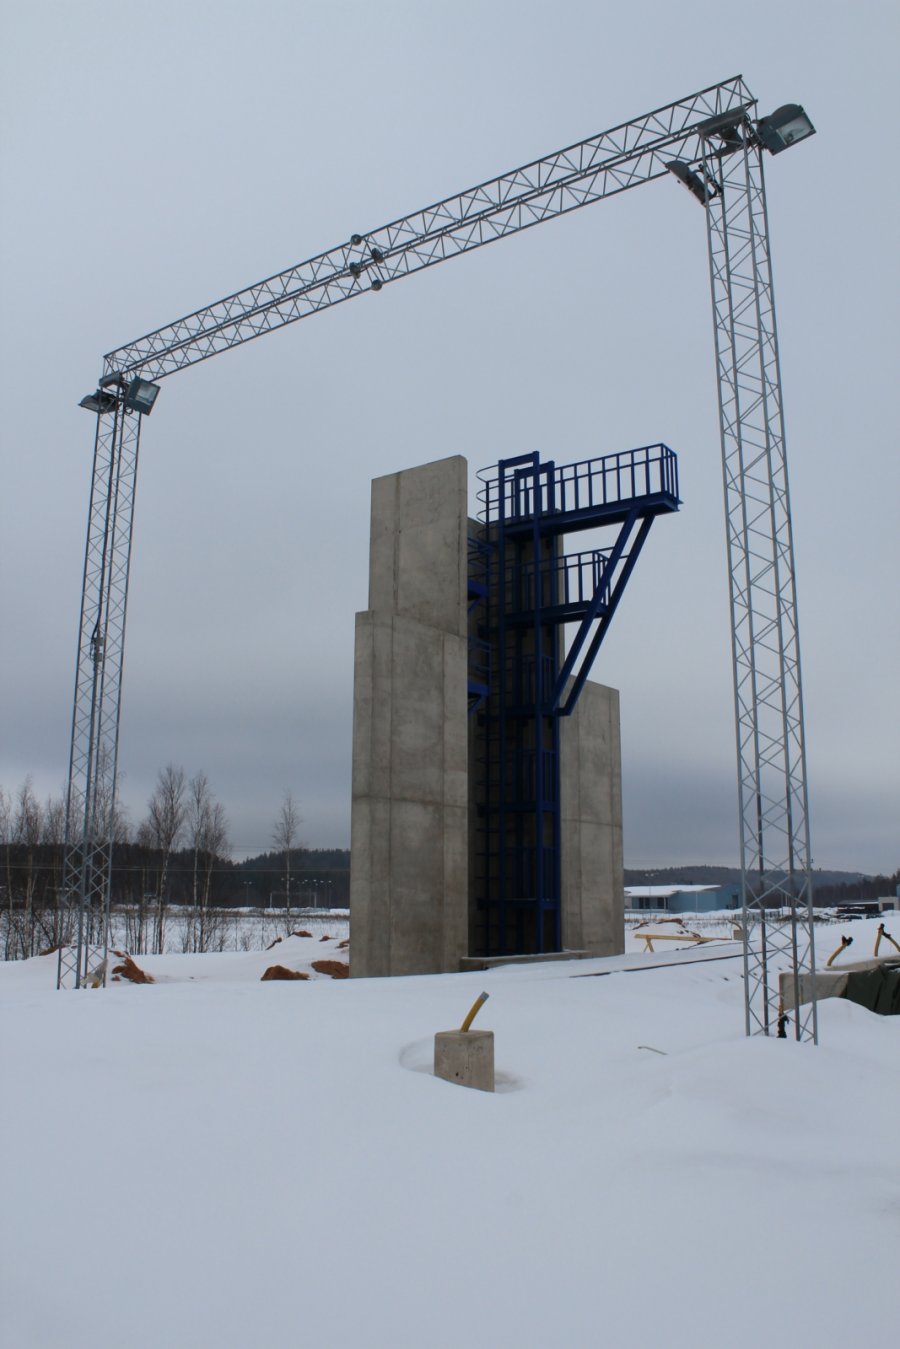 Construction of Koidula station's x-ray complex
02.03.2011
